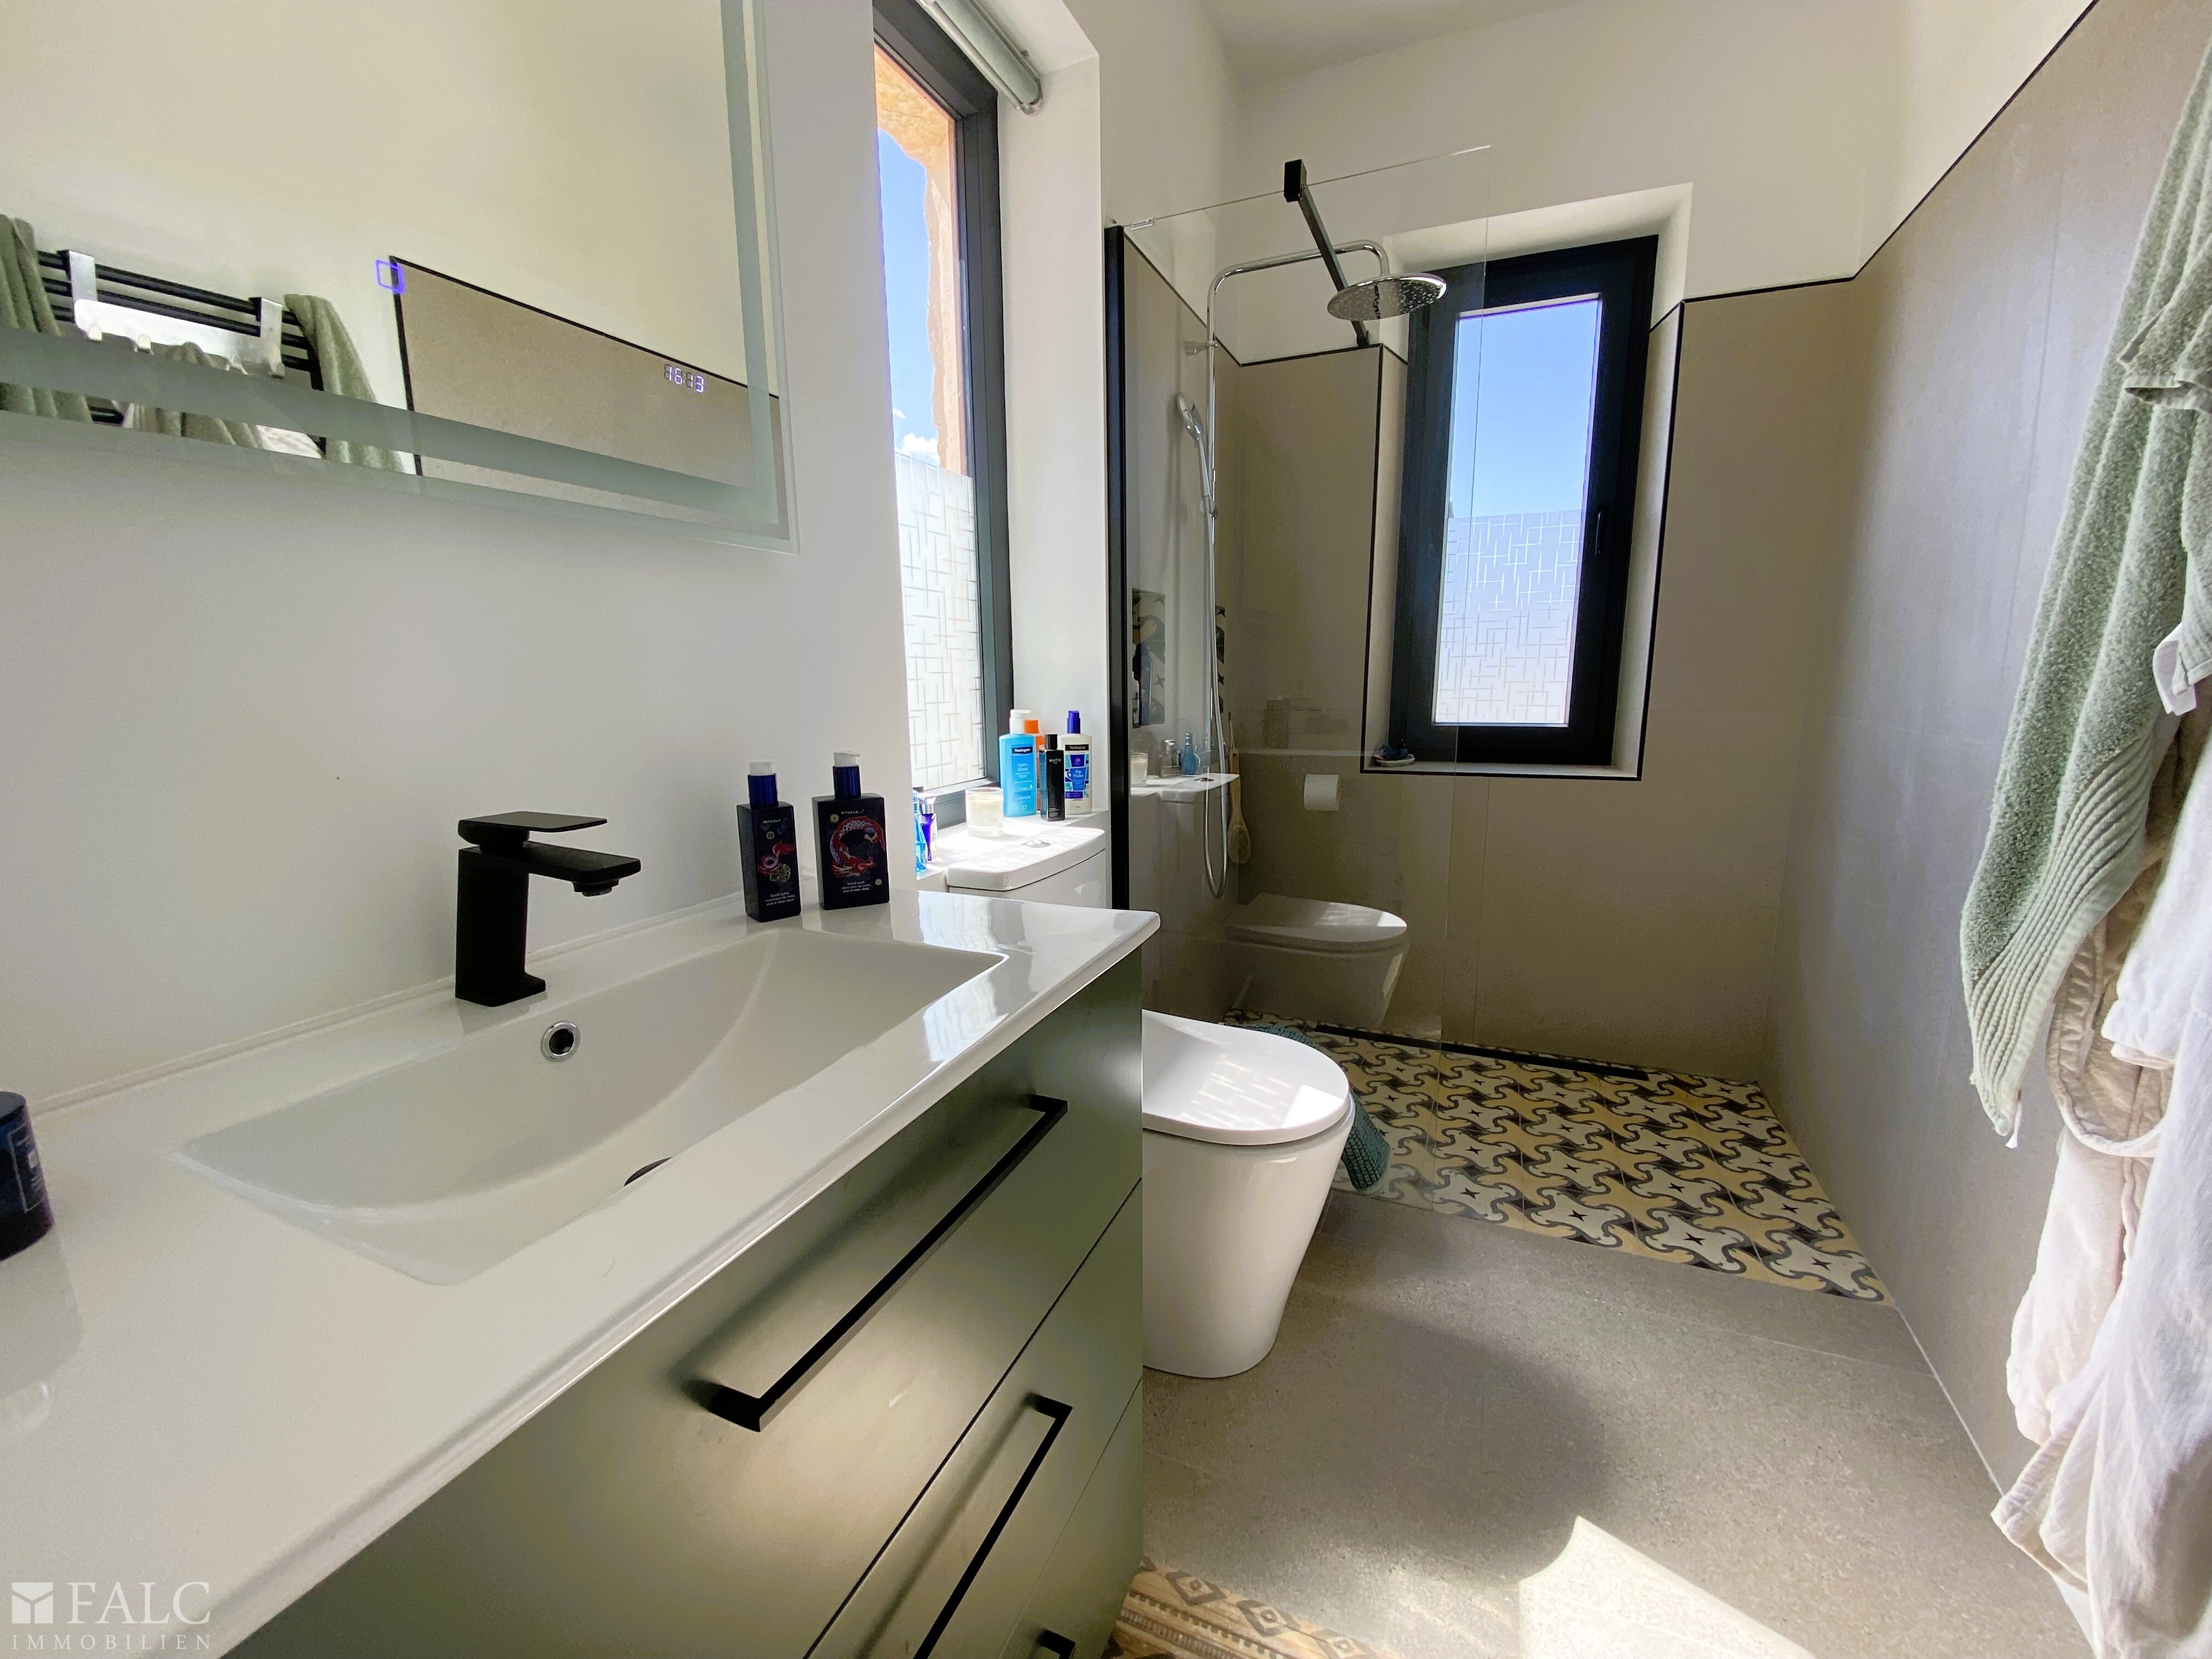 Badezimmer - Bath room